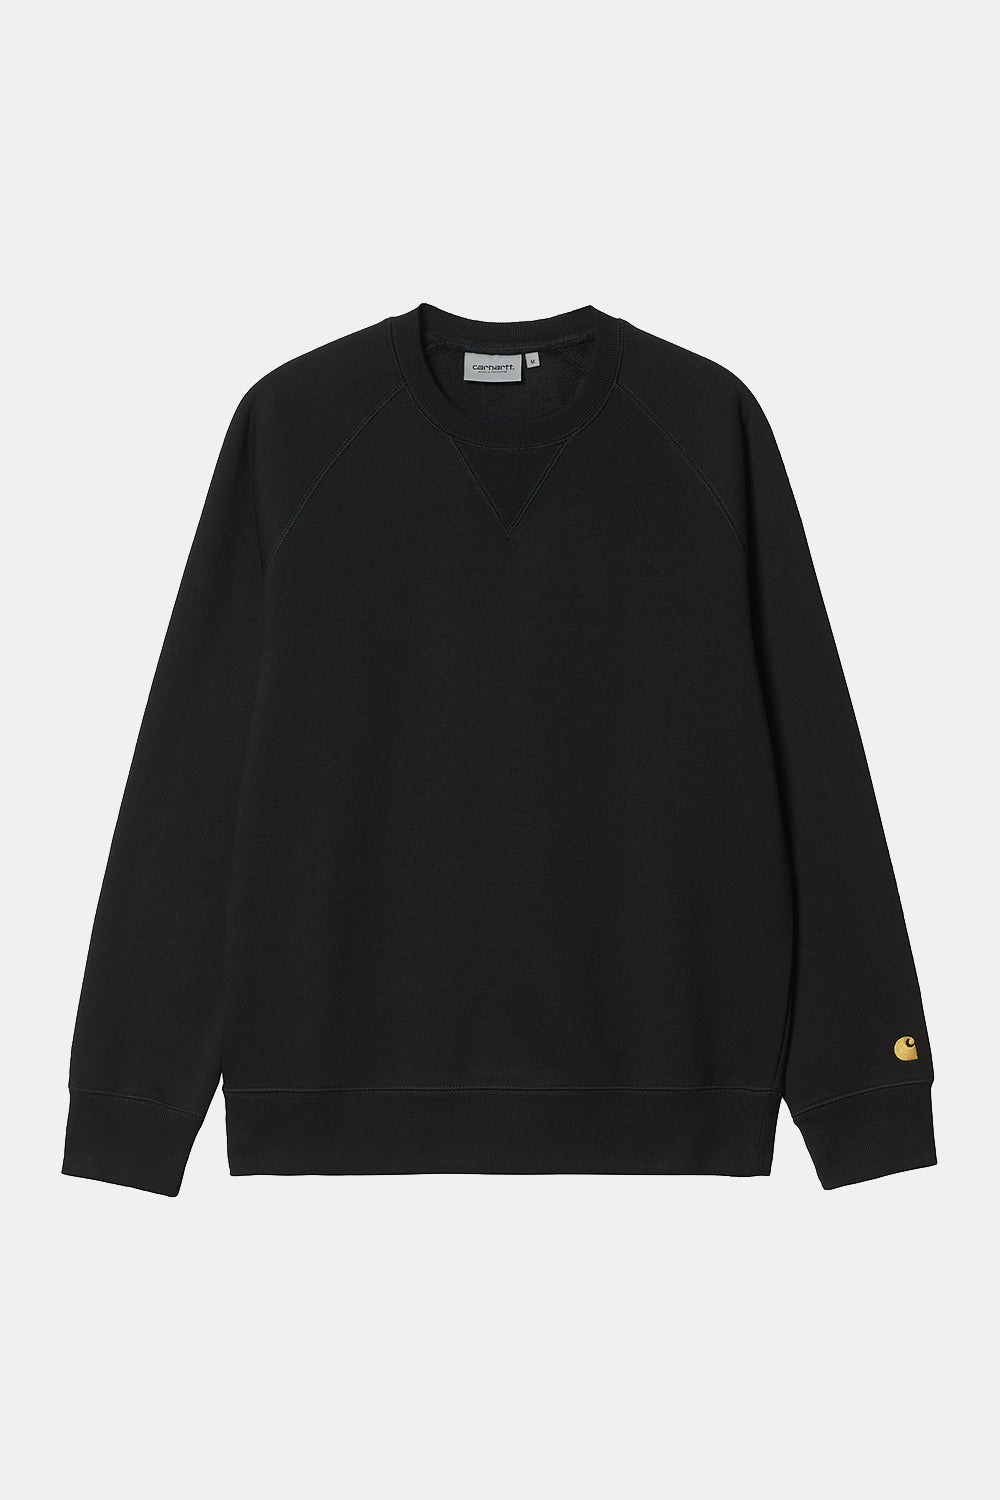 Carhartt WIP Chase Heavy Sweatshirt (Black & Gold) Front